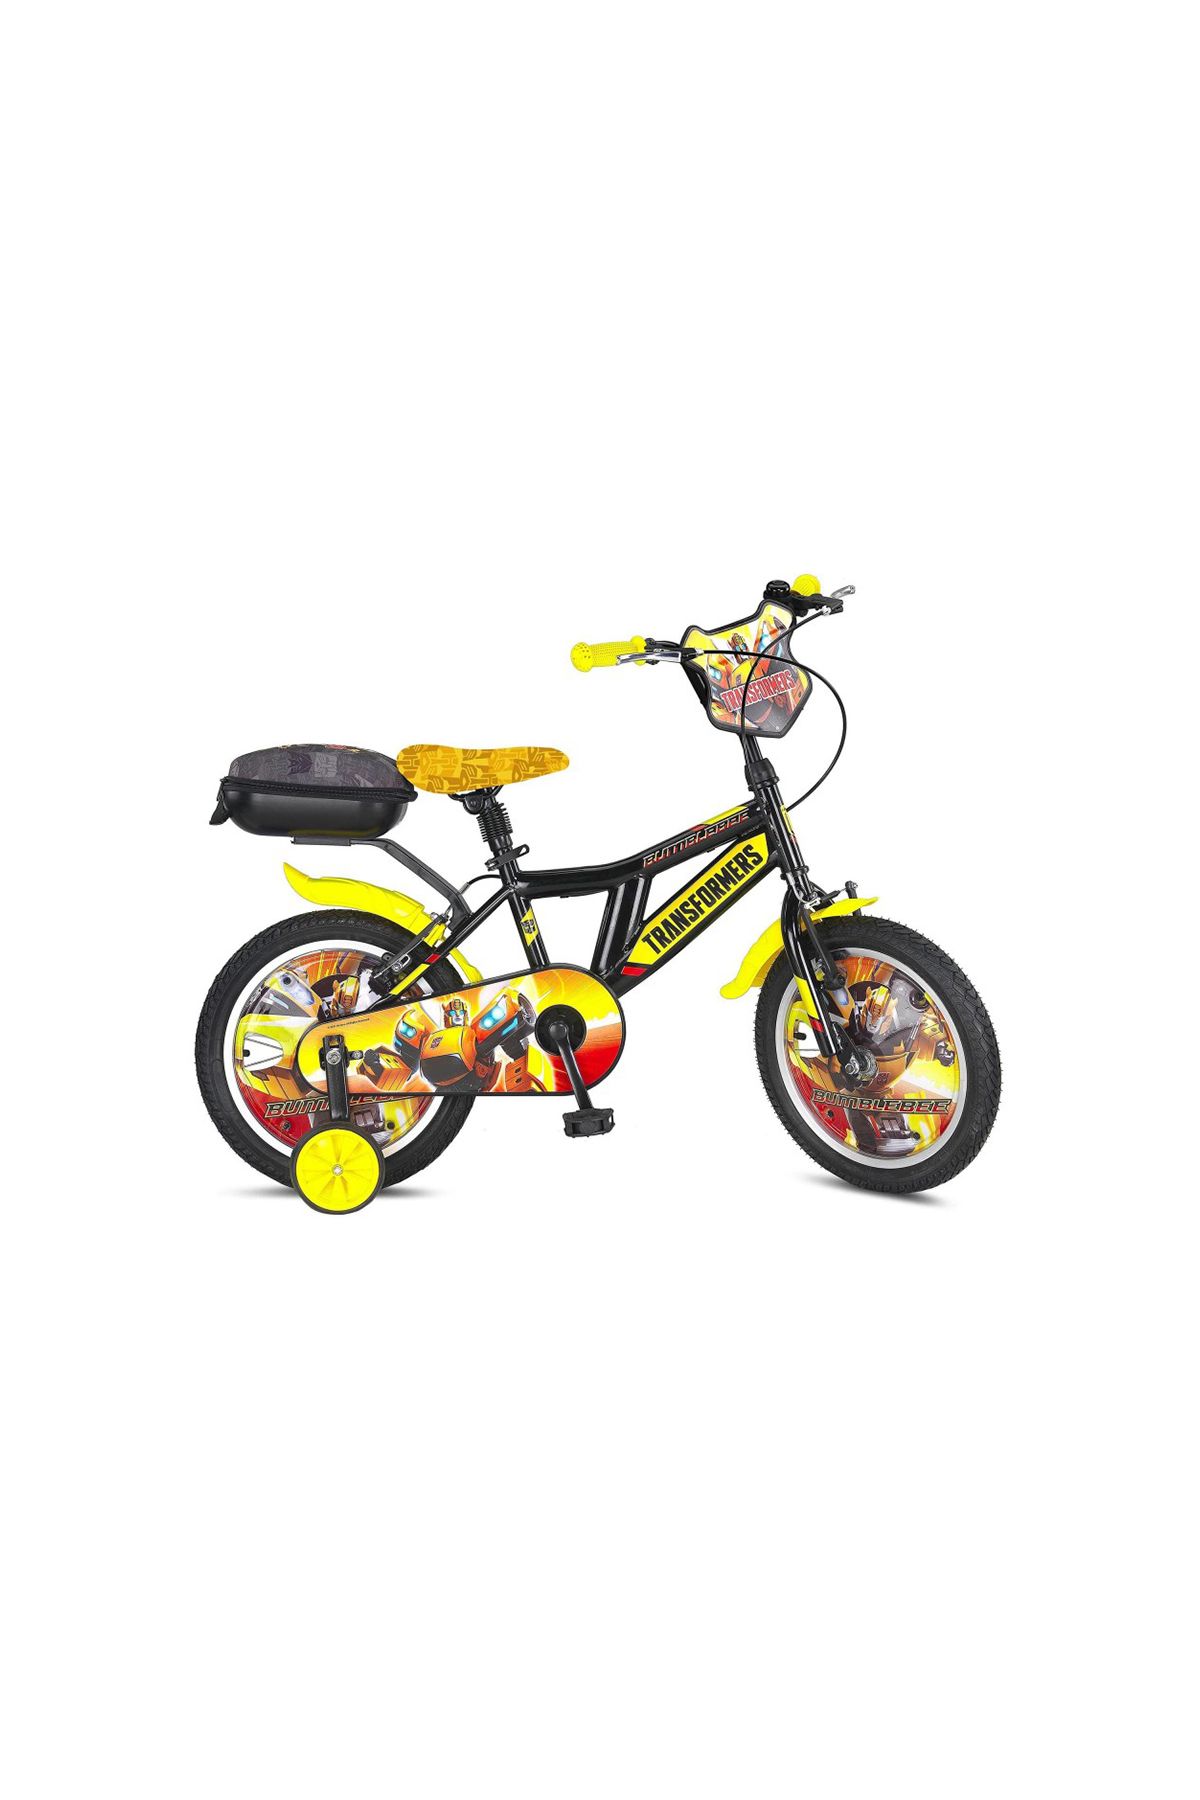 Ümit Transformers 16 Jant Çocuk Bisikleti Siyah - Sarı